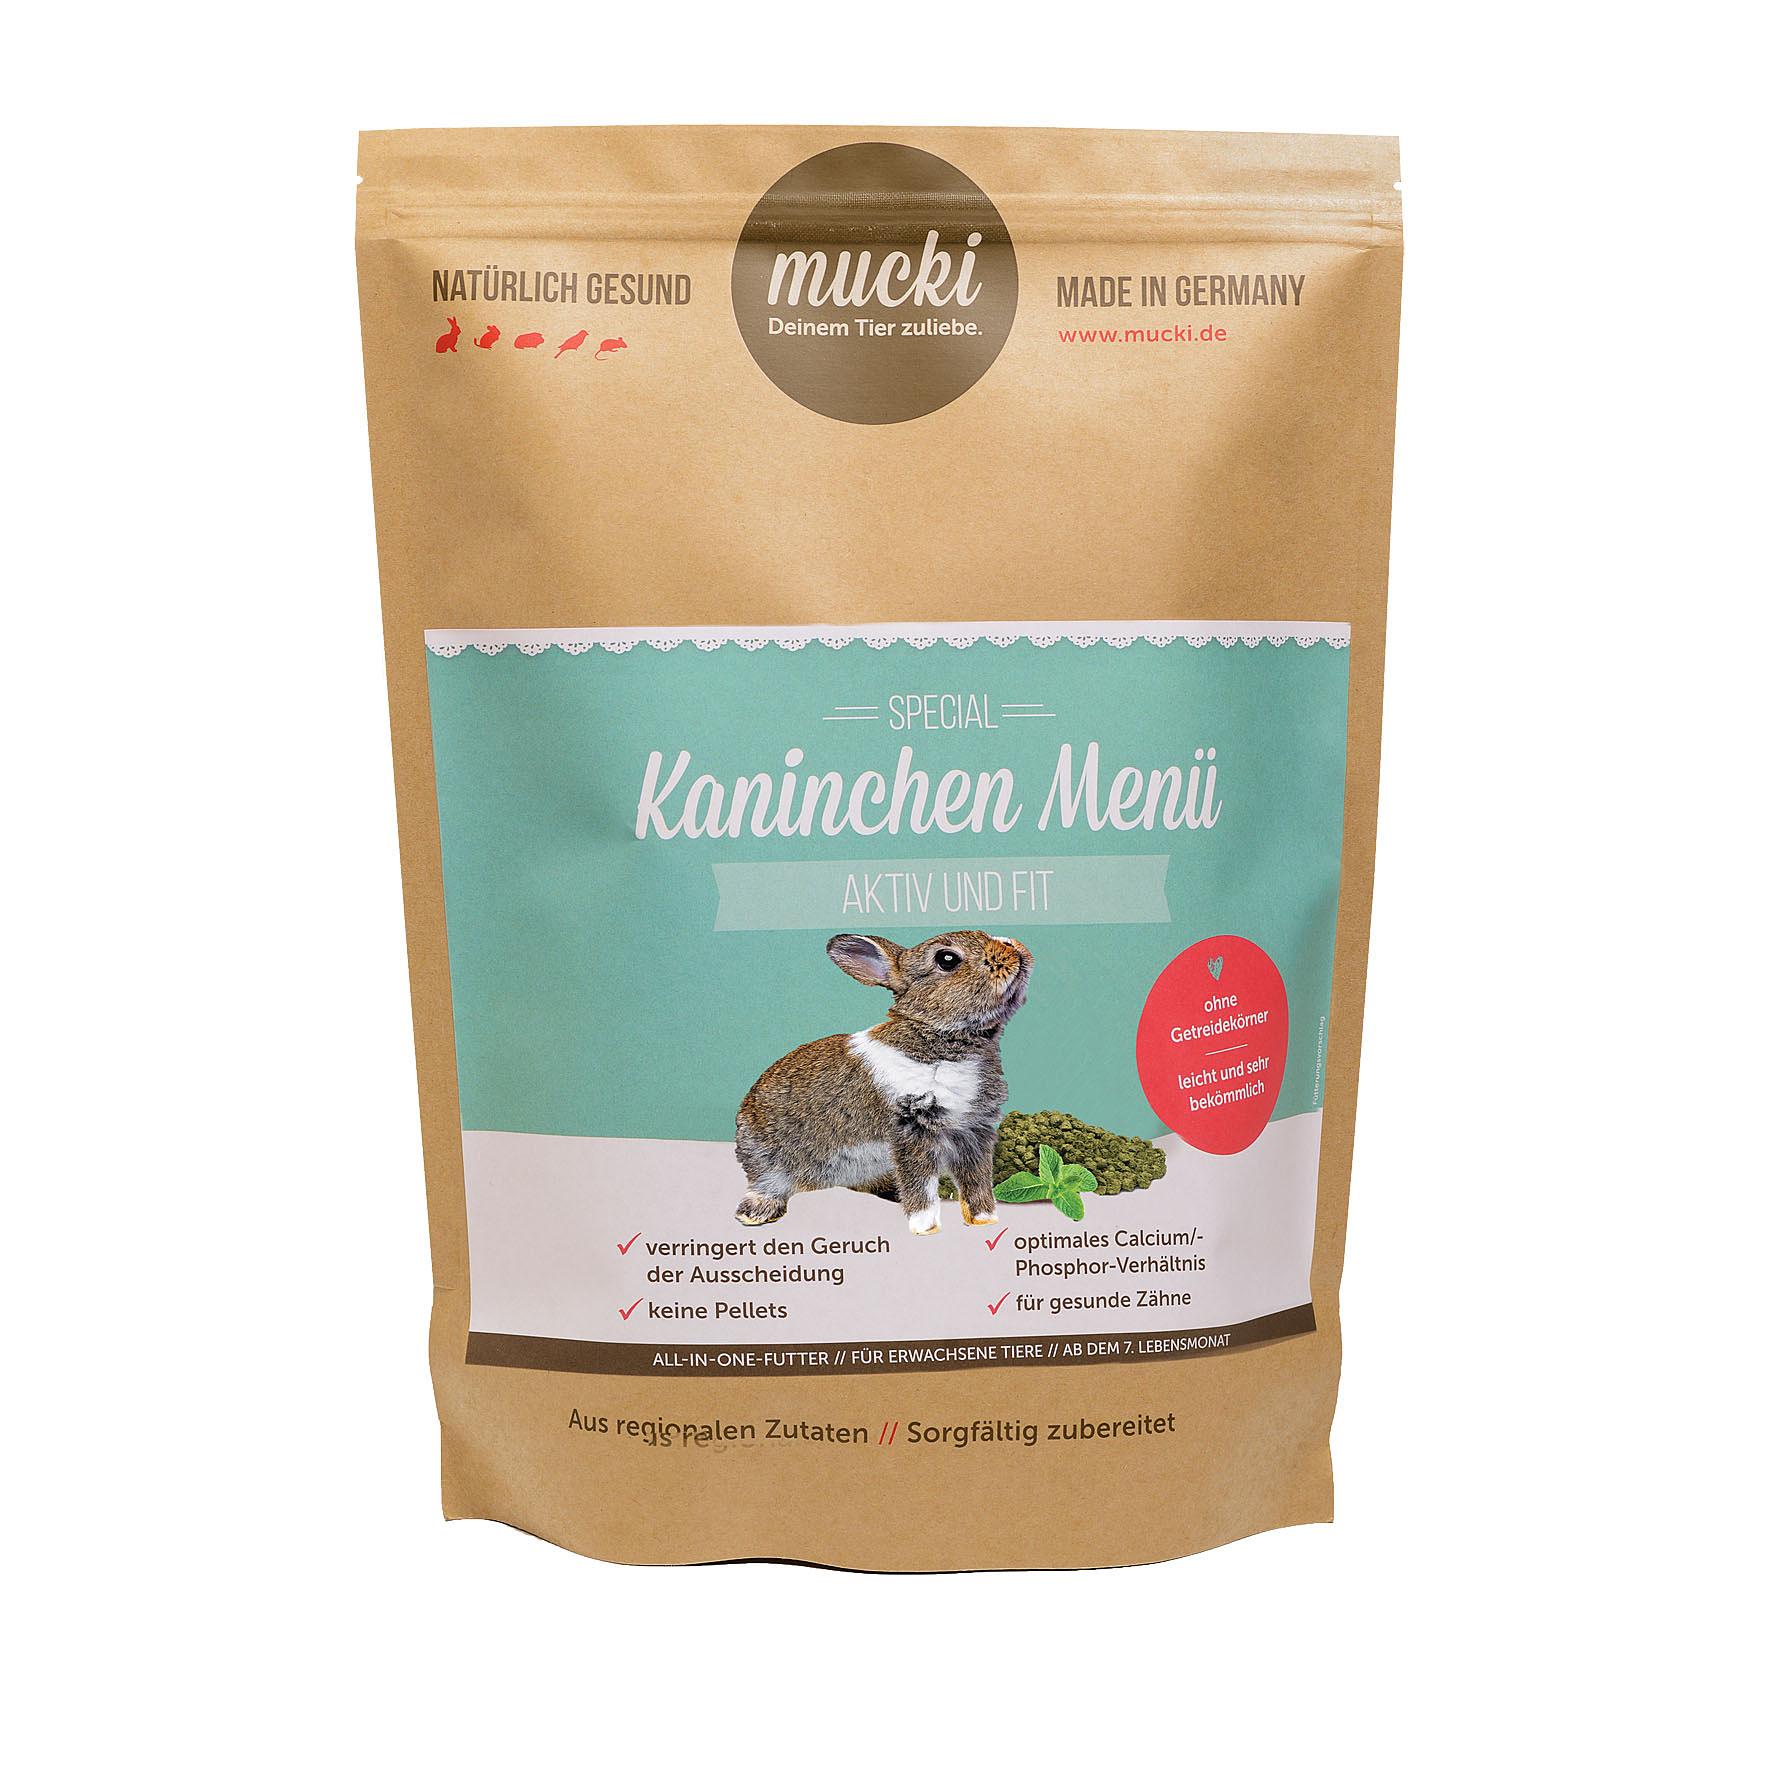 Mucki Kaninchen Menü Aktiv & Fit, 750g